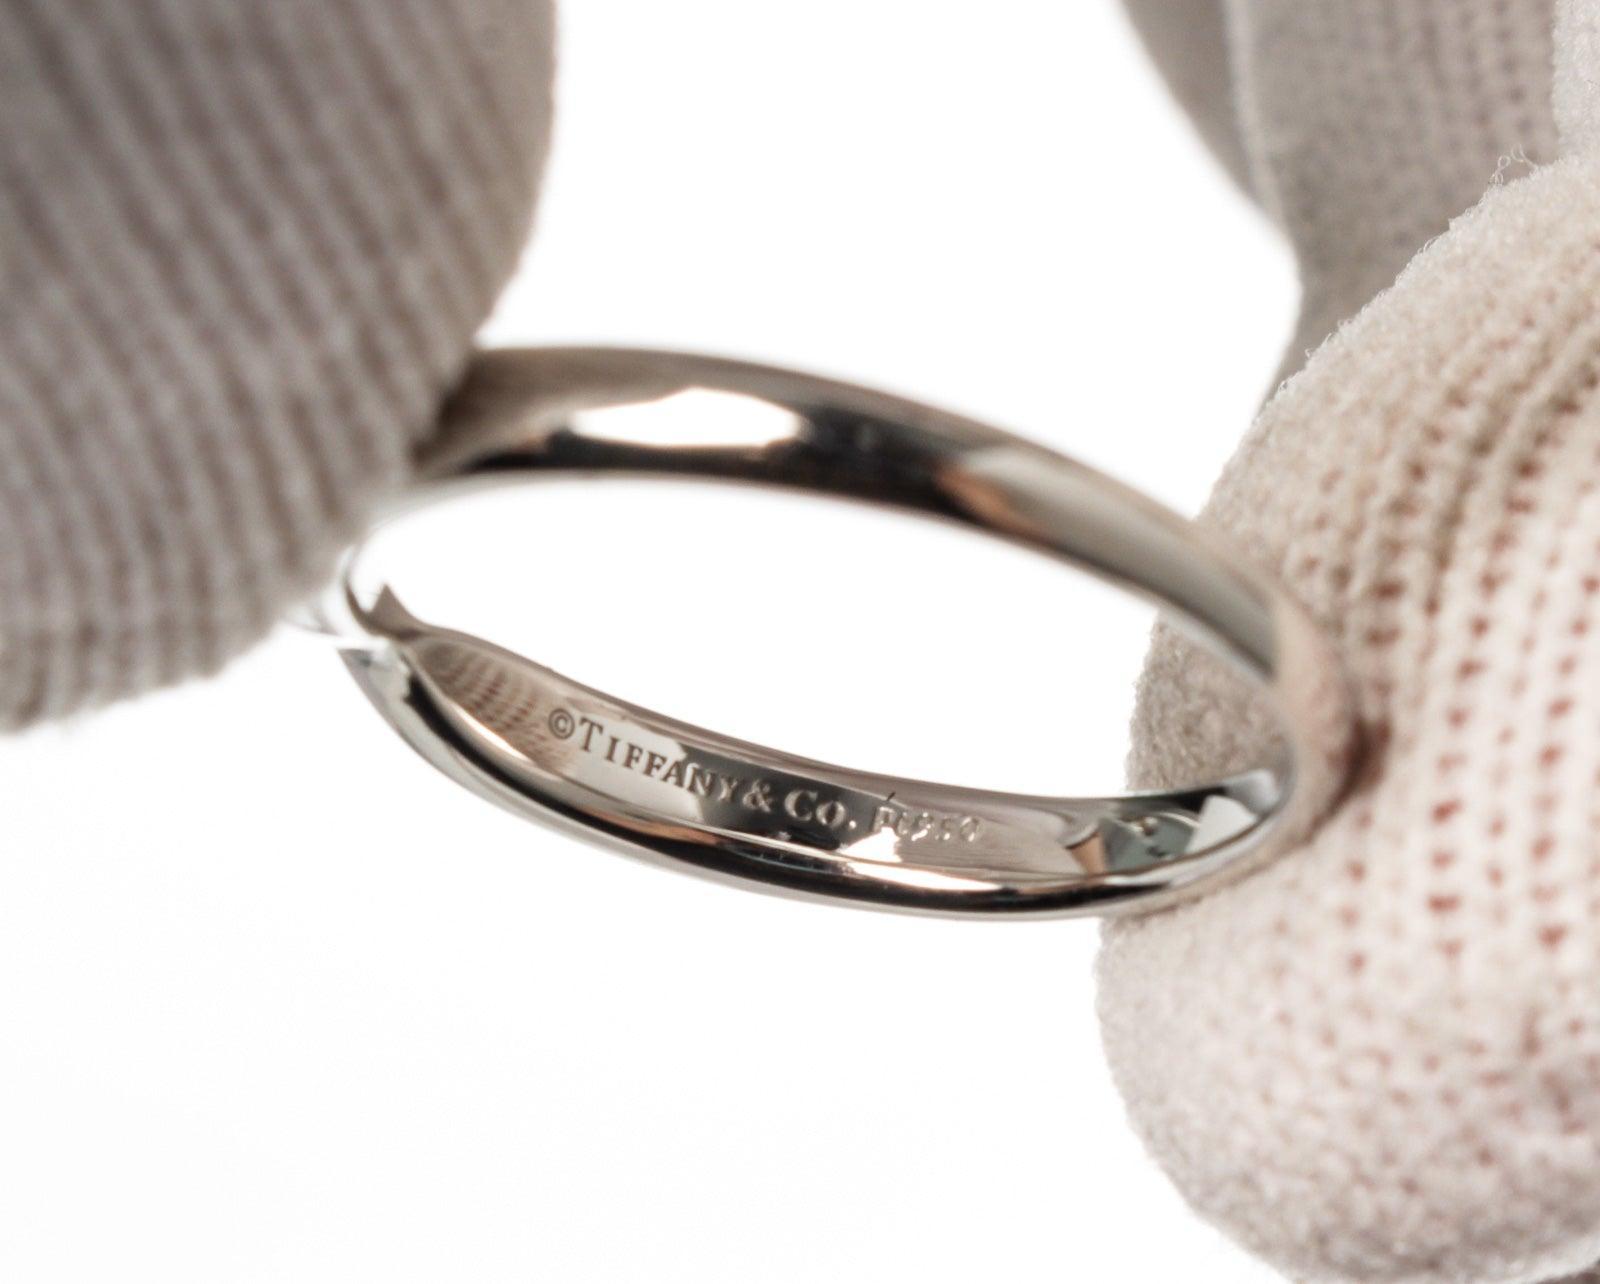 Tiffany & Co. Silberner Harmony Ring mit silberfarbener Hardware.

52973MSC  